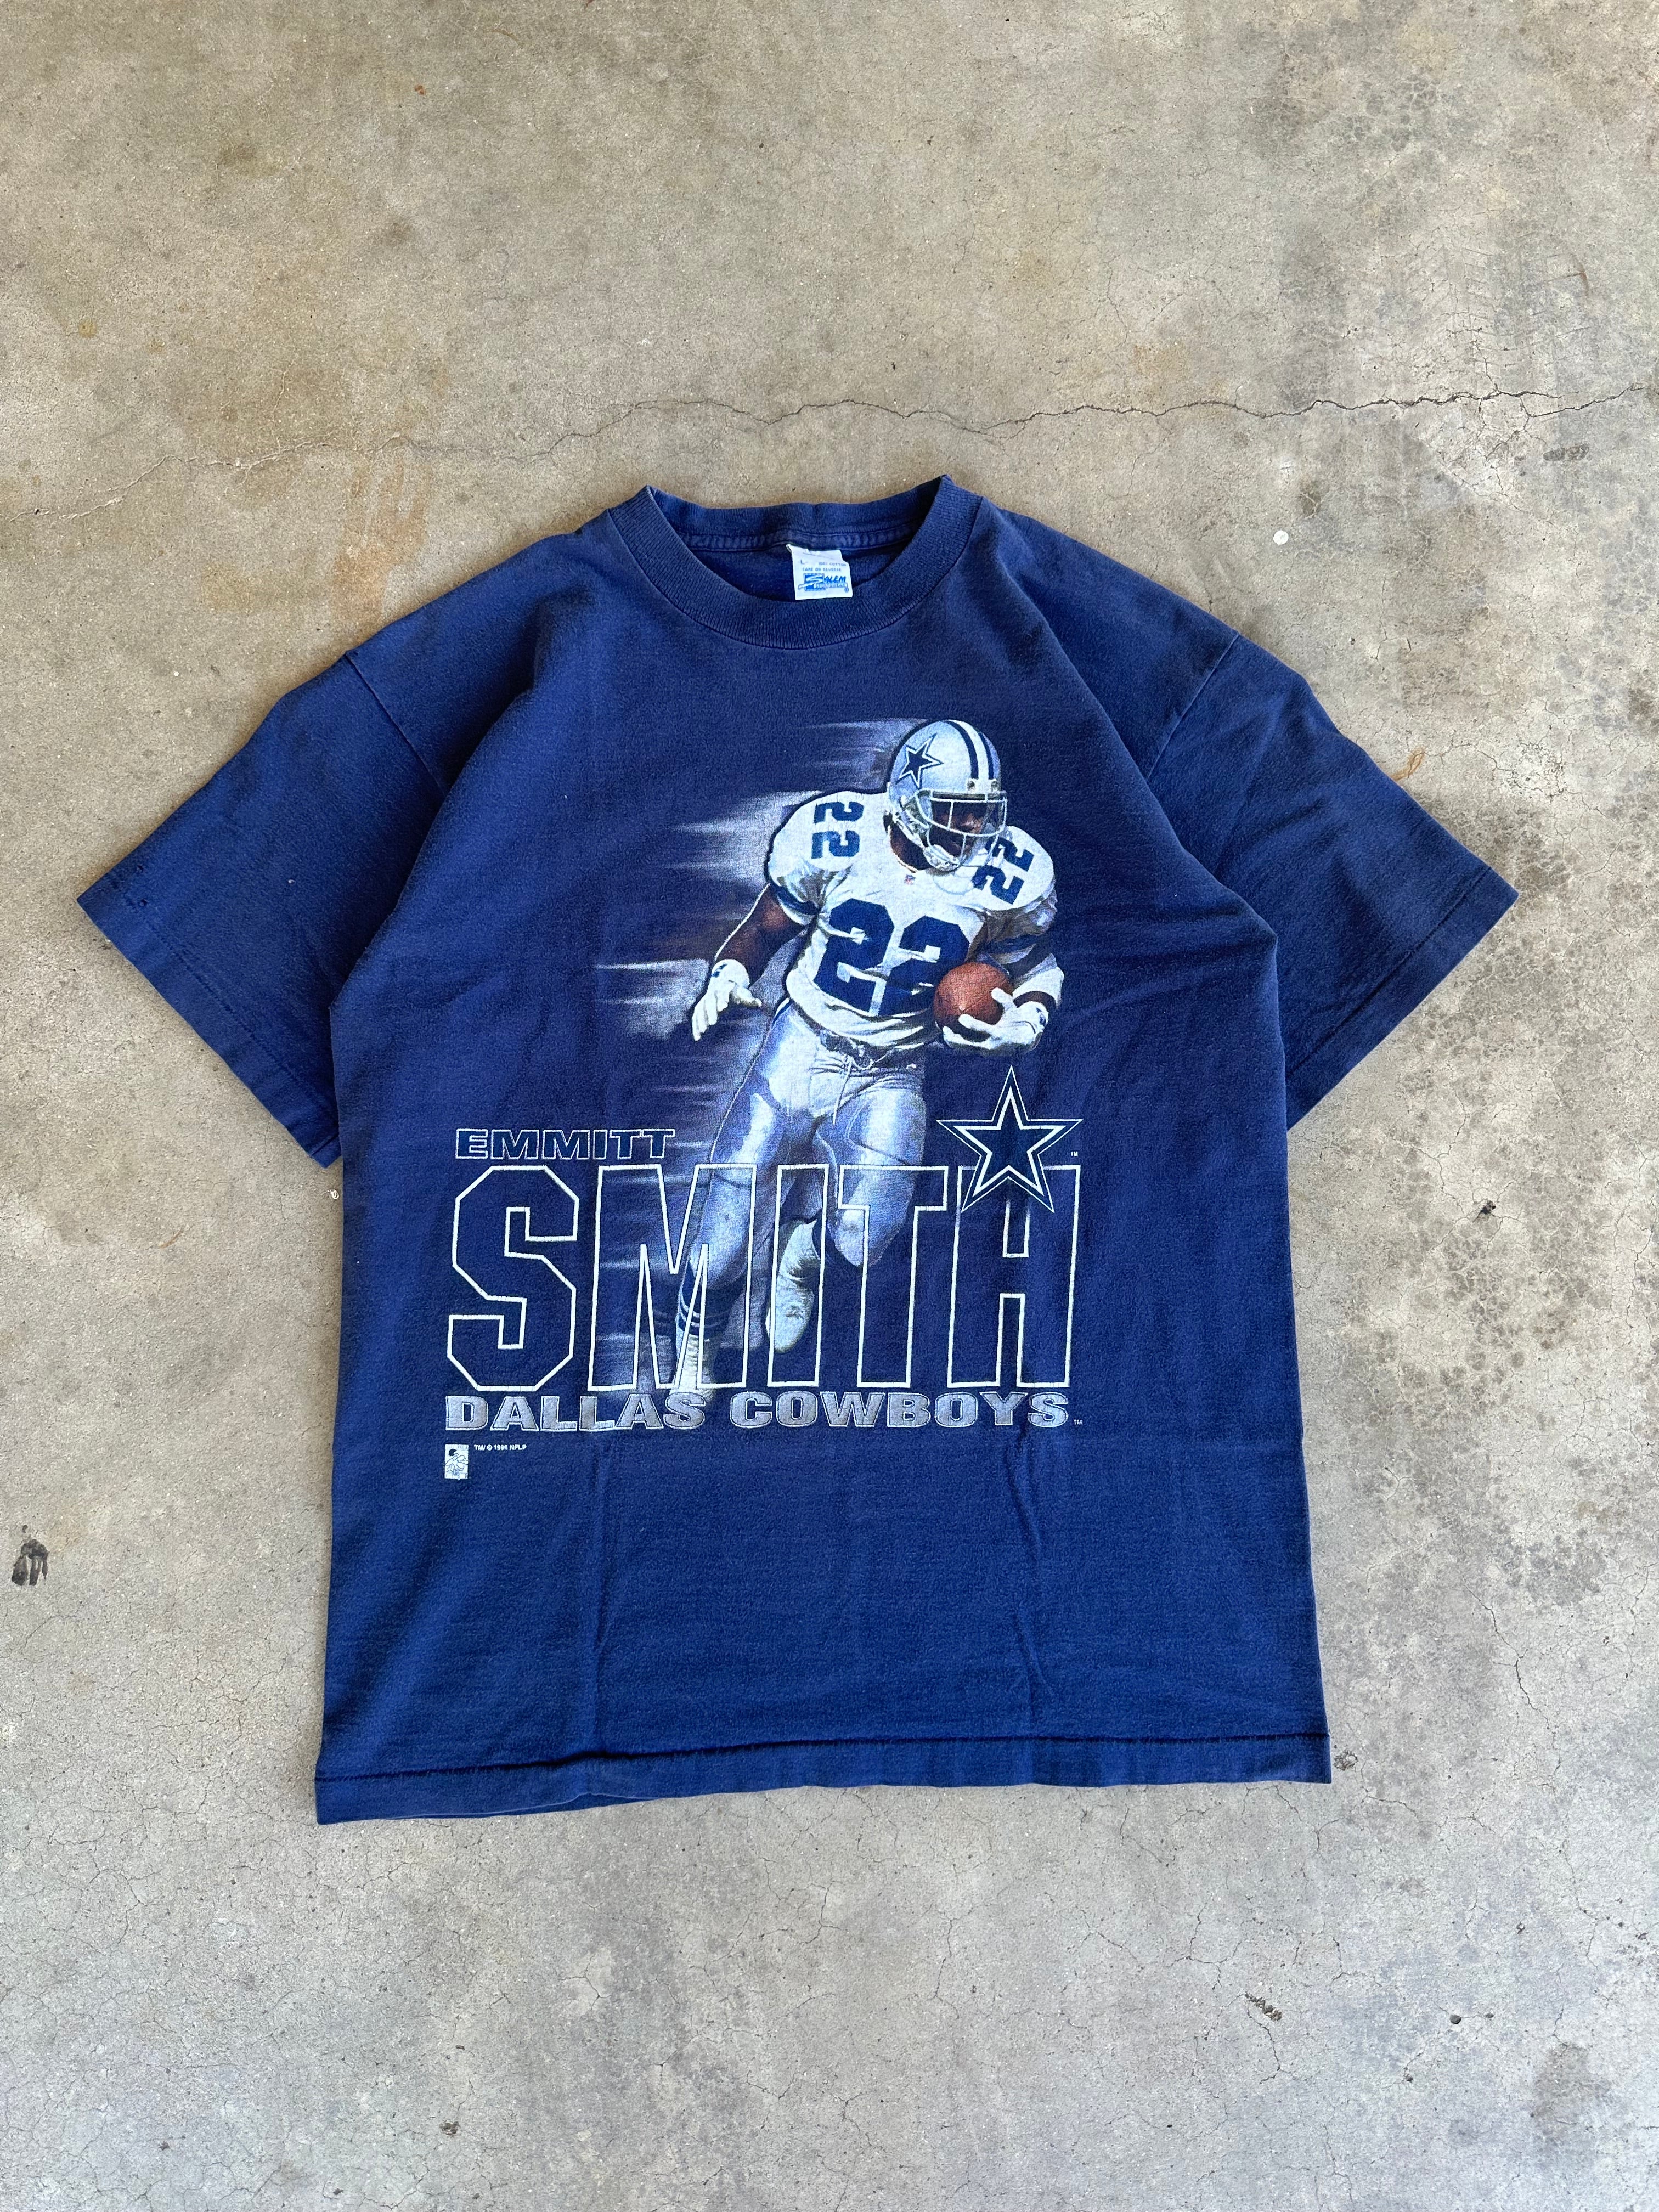 1995 Emmitt Smith Dallas Cowboys T-Shirt (L)